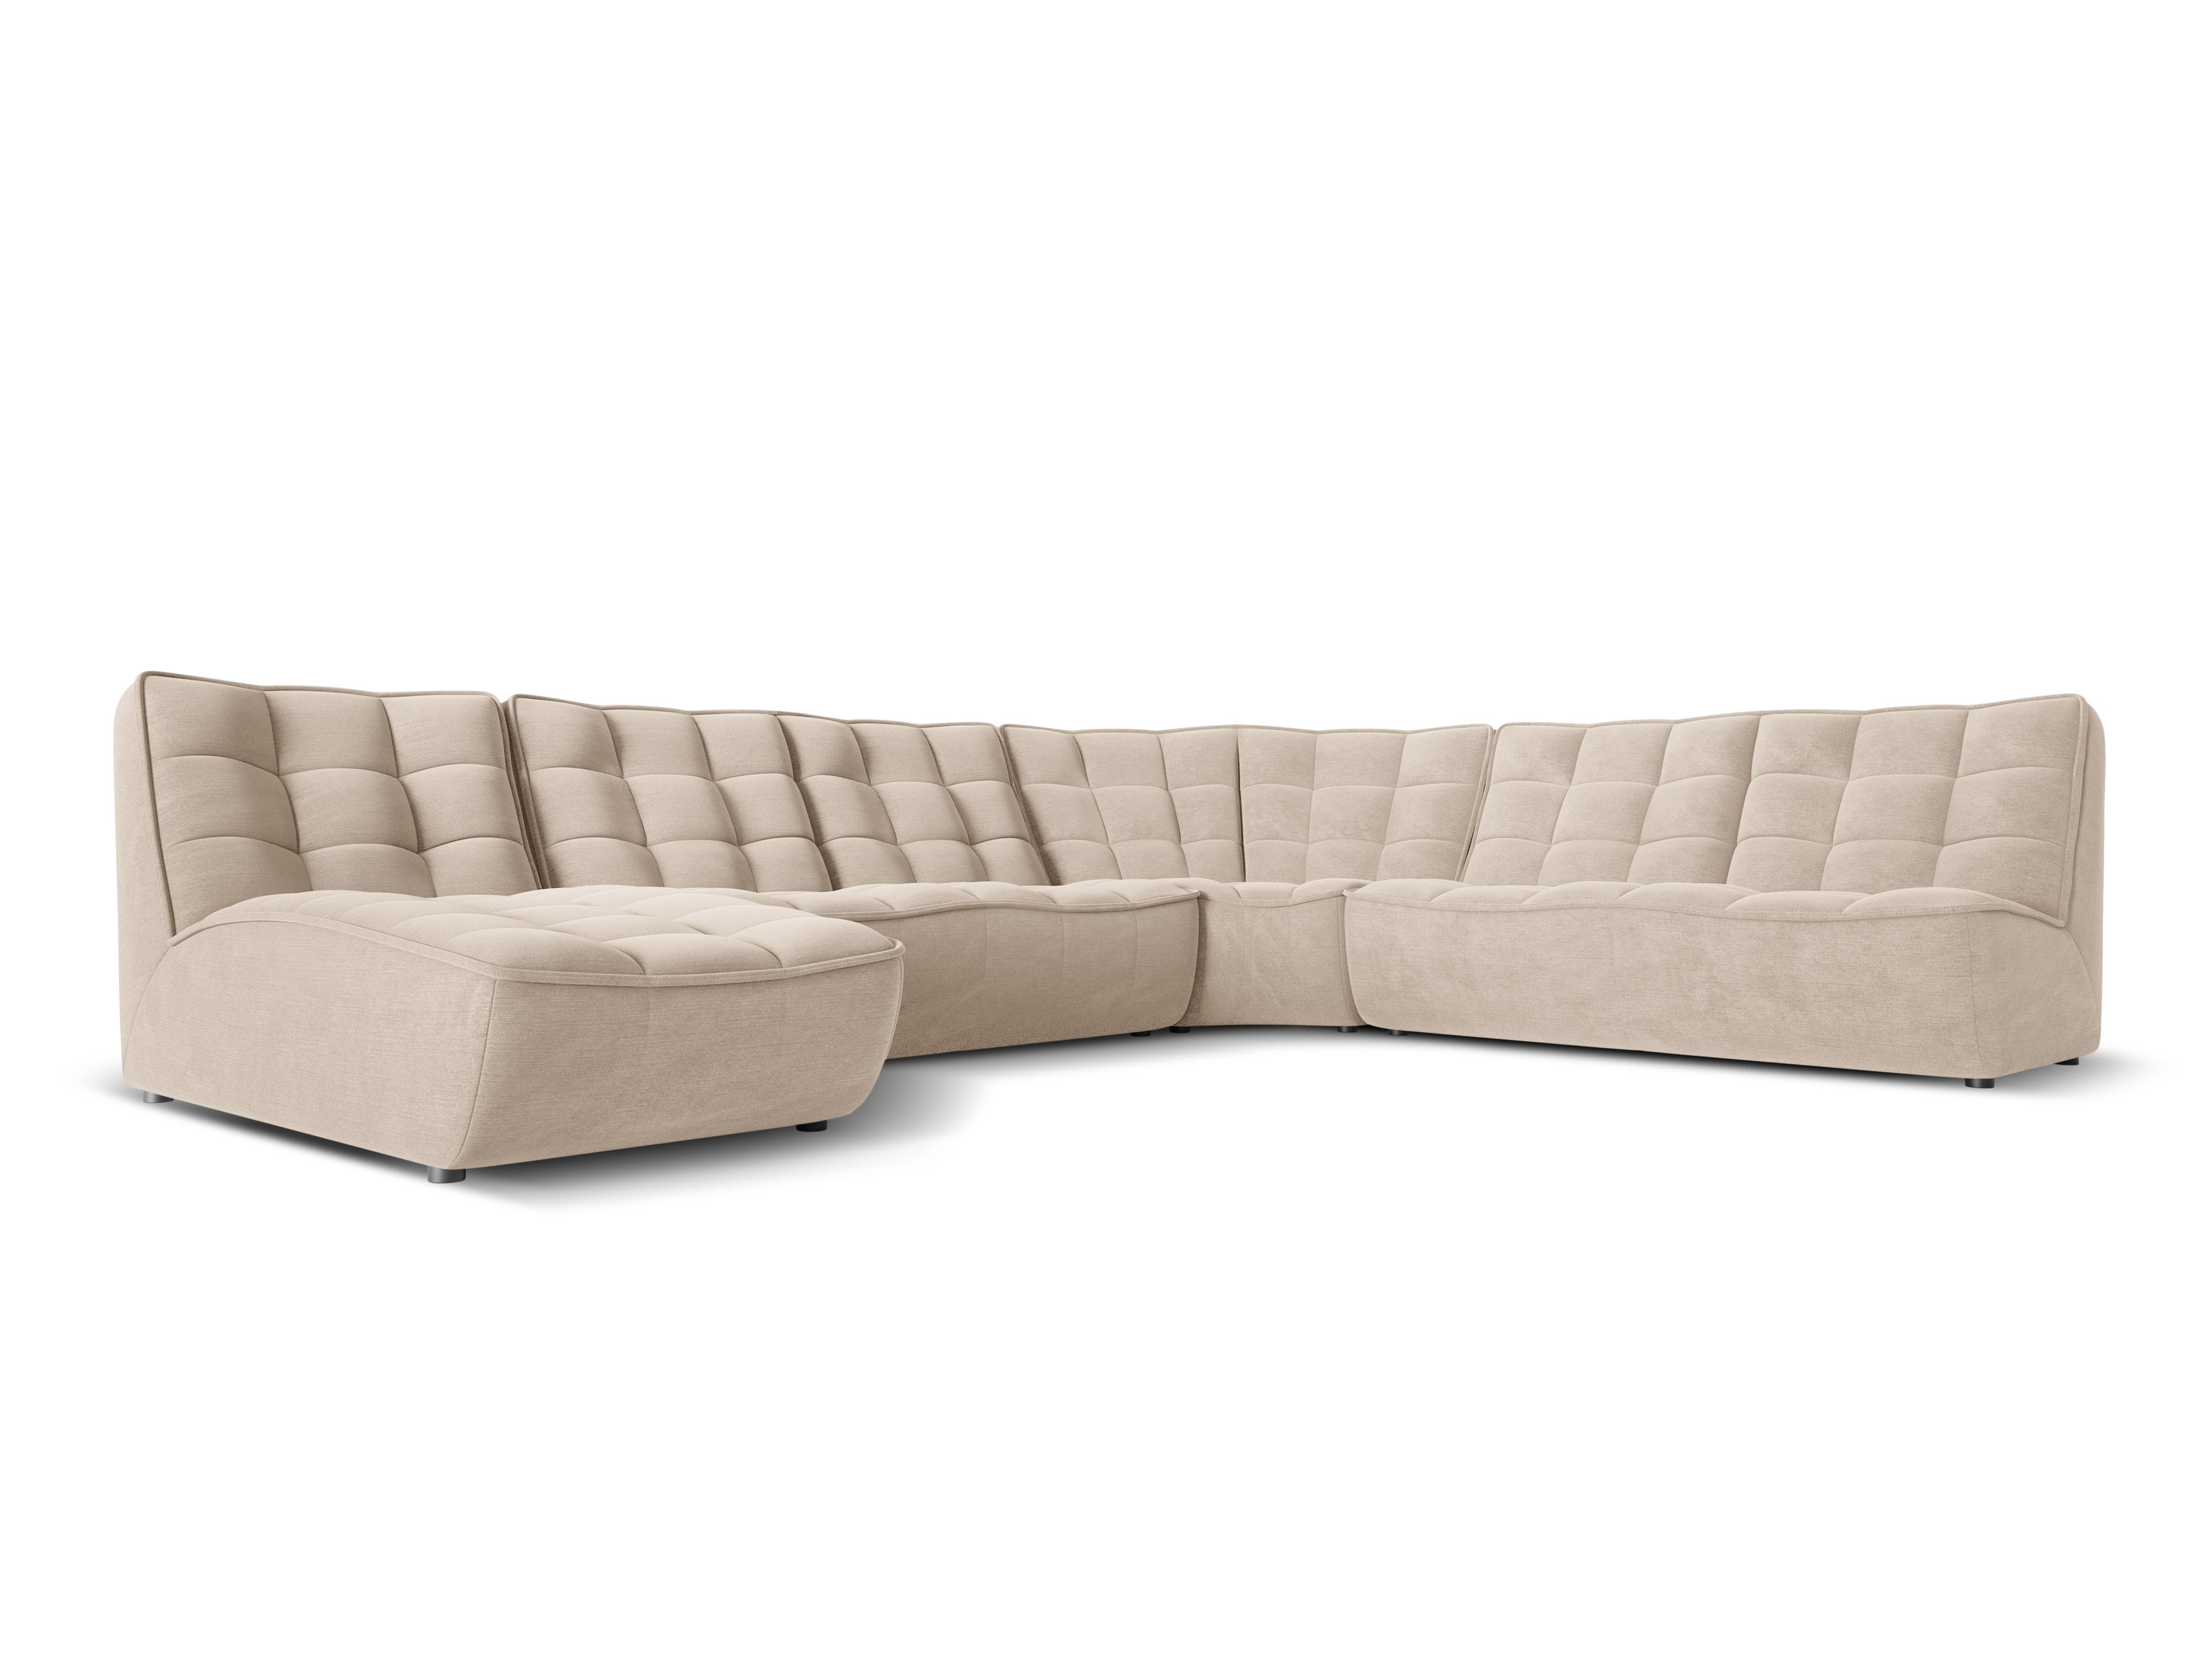 Modular Panoramic Right Corner Sofa, "Moni", 8 Seats, 367x284x91
Made in Europe, Maison Heritage, Eye on Design